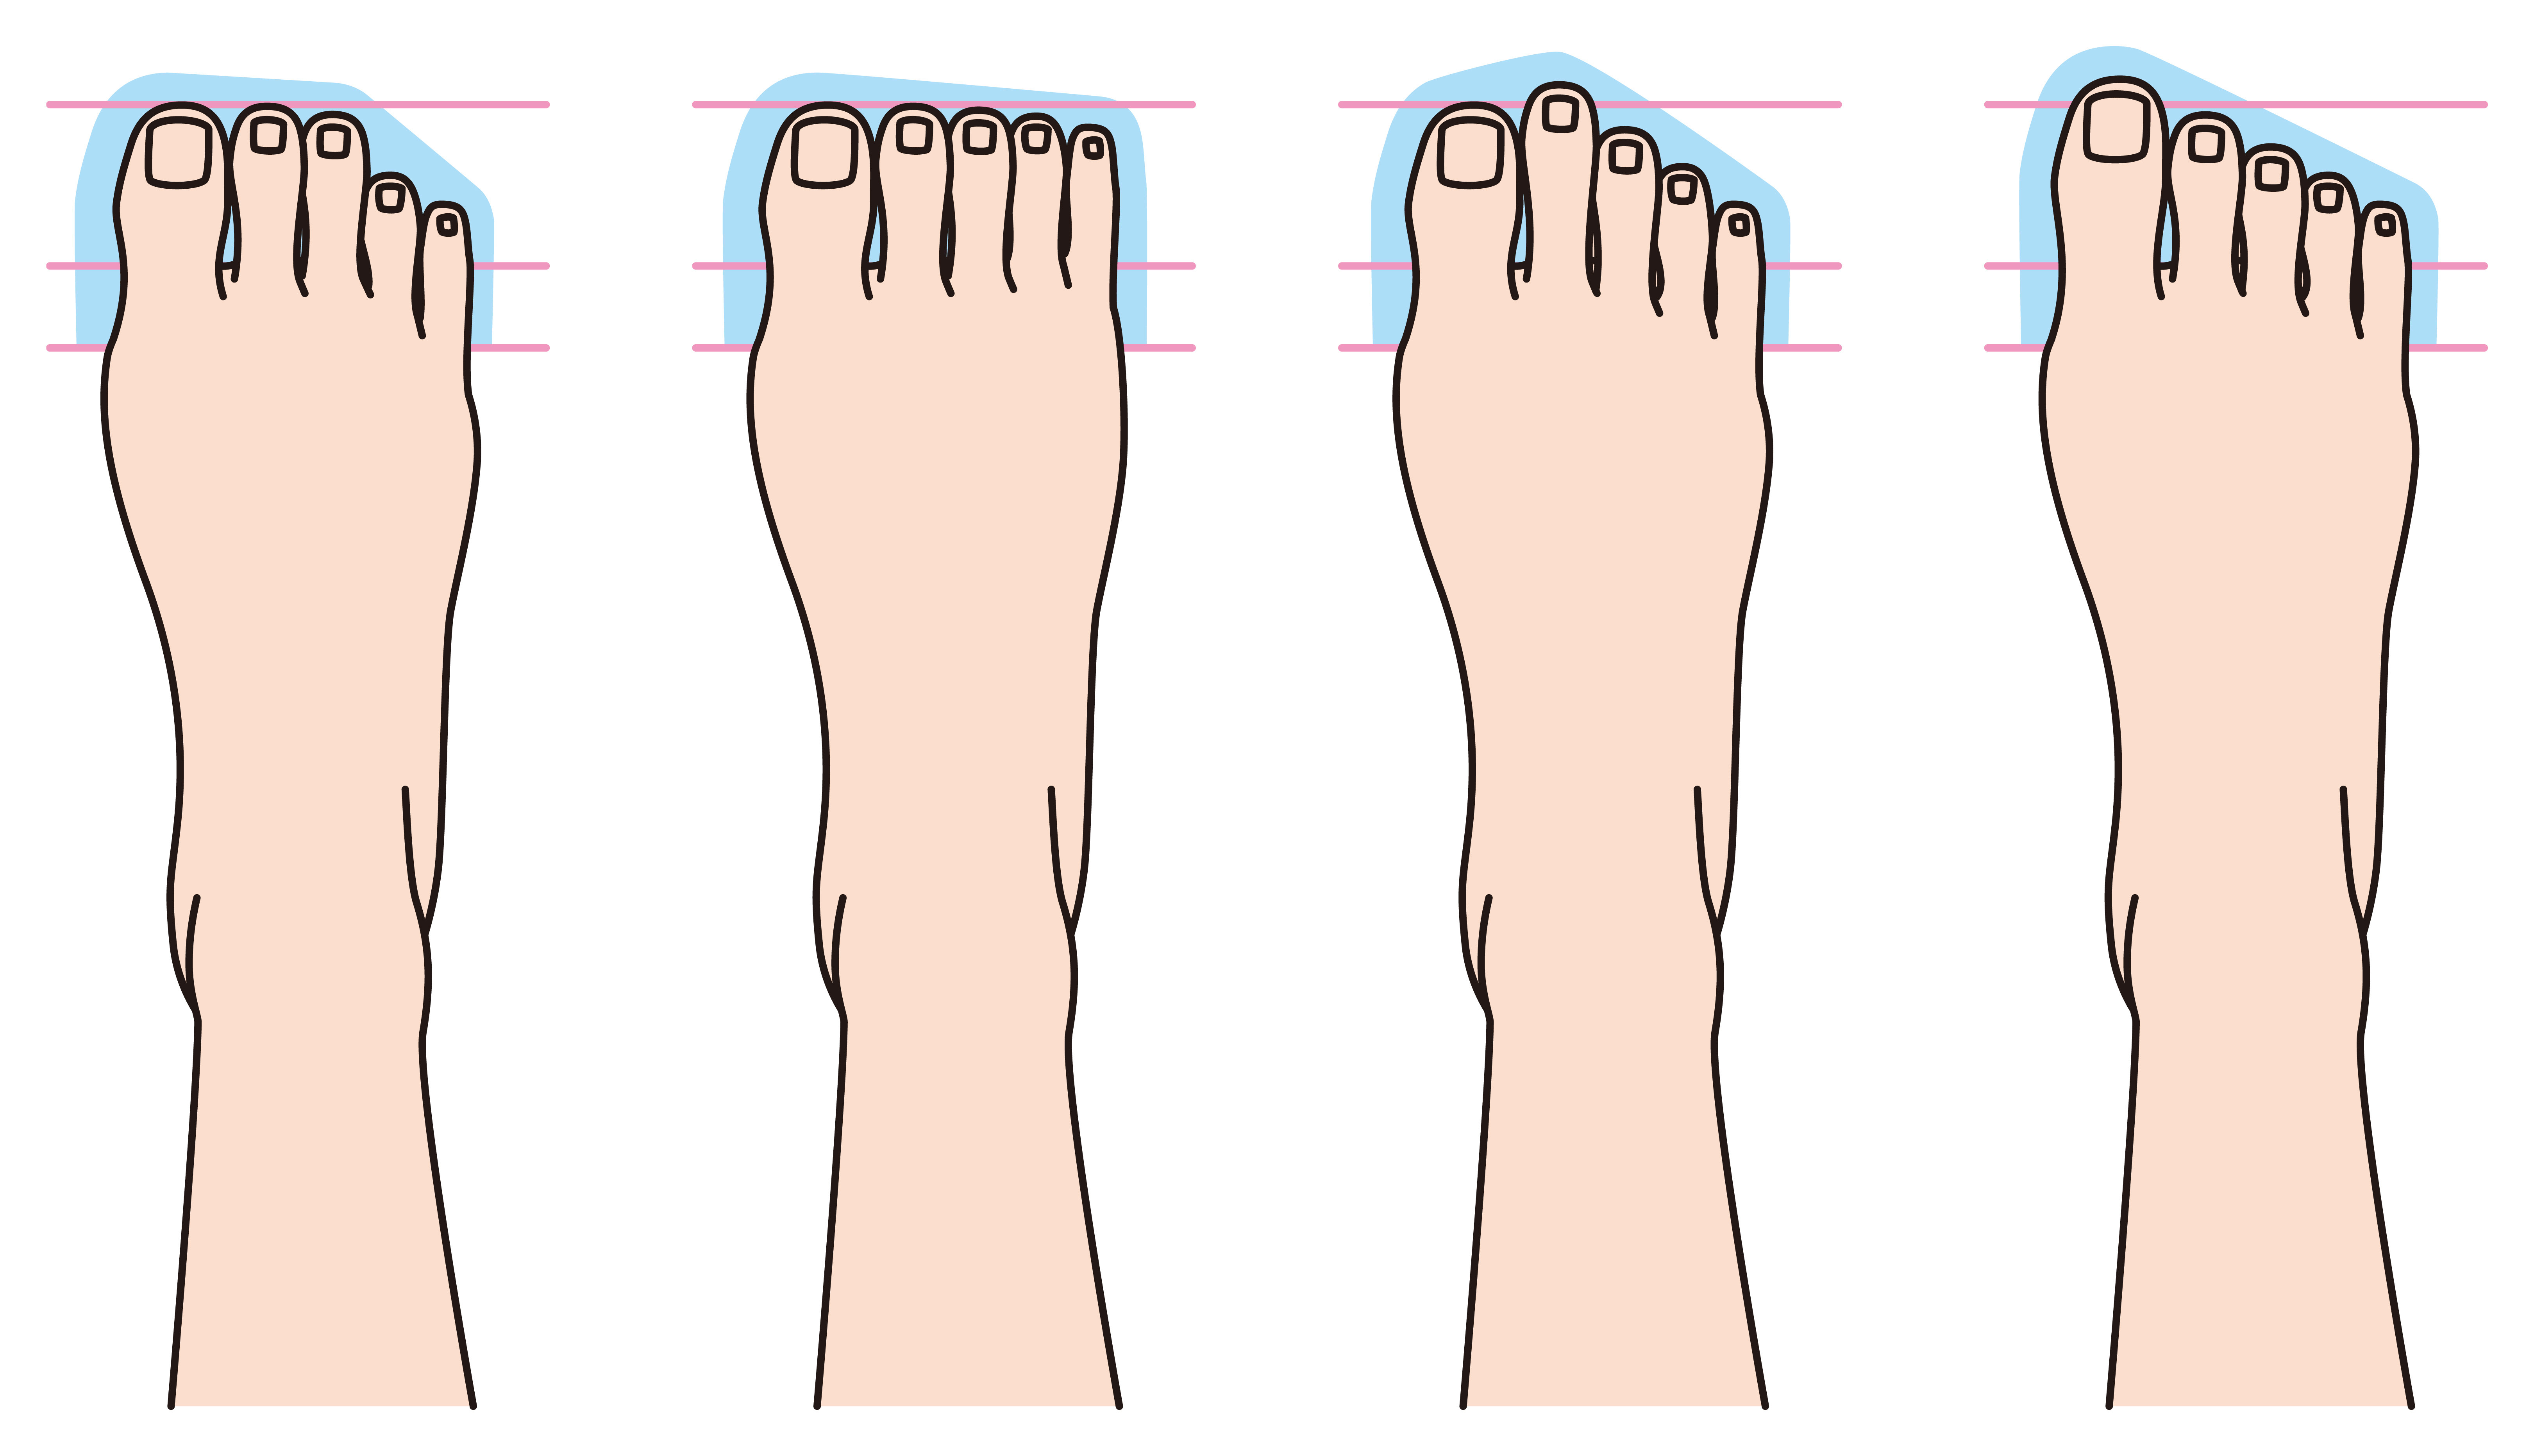 Toe Length Chart